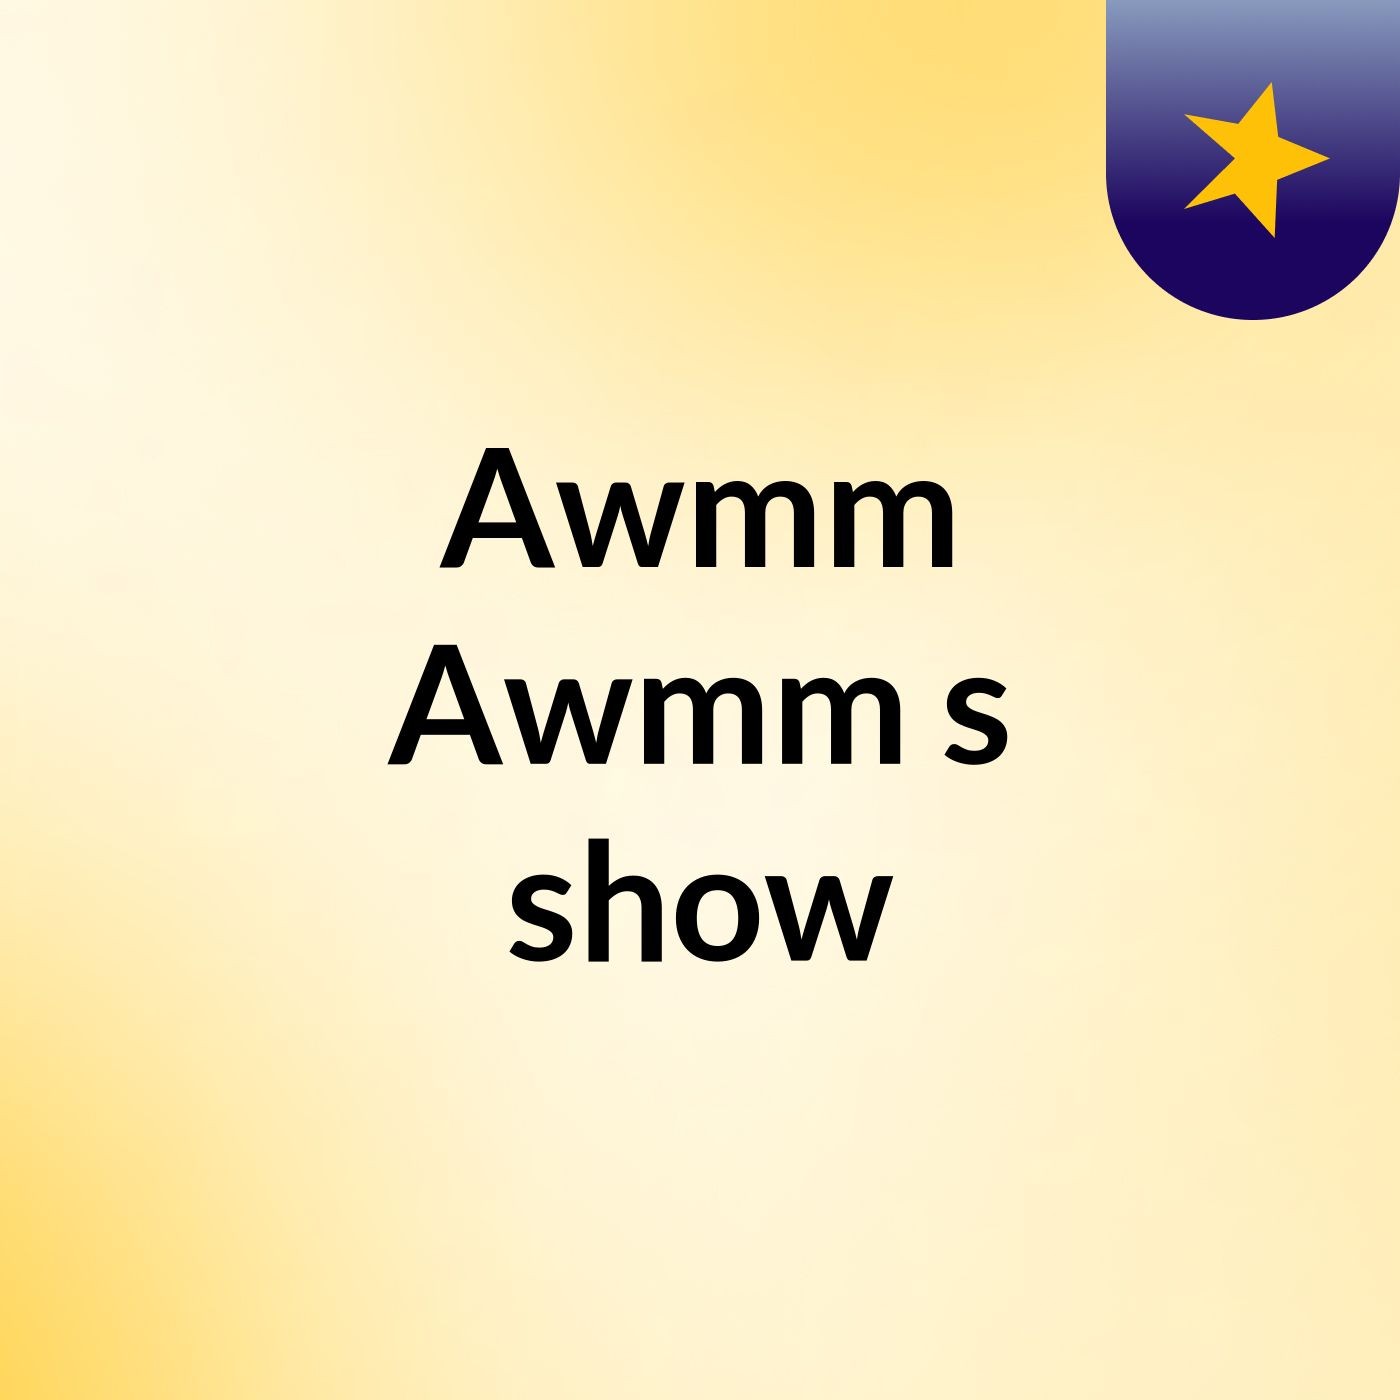 Awmm Awmm's show